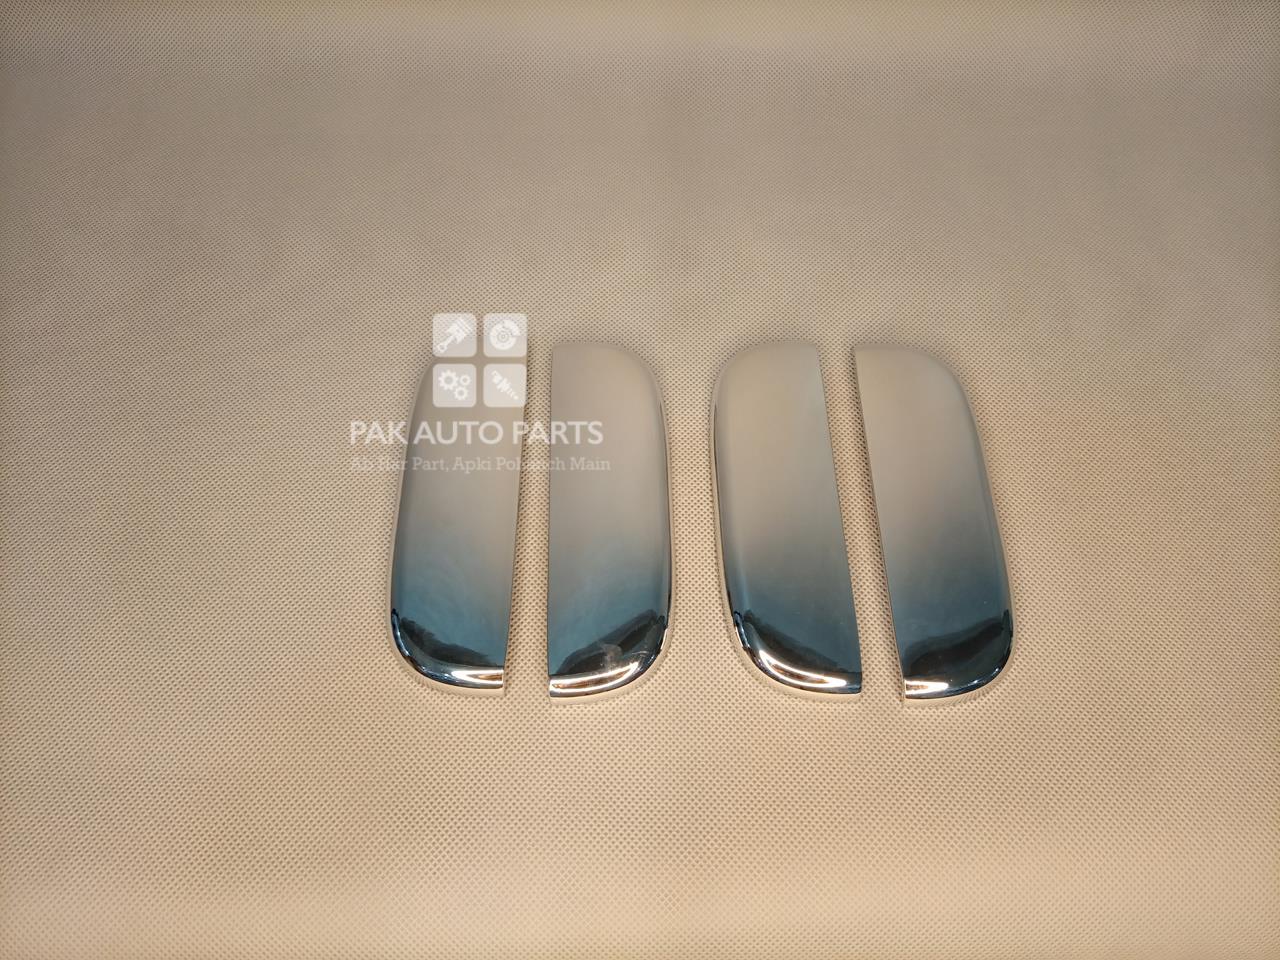 Picture of Suzuki Wagon R Handle Cover Simple Chrome (4pcs)